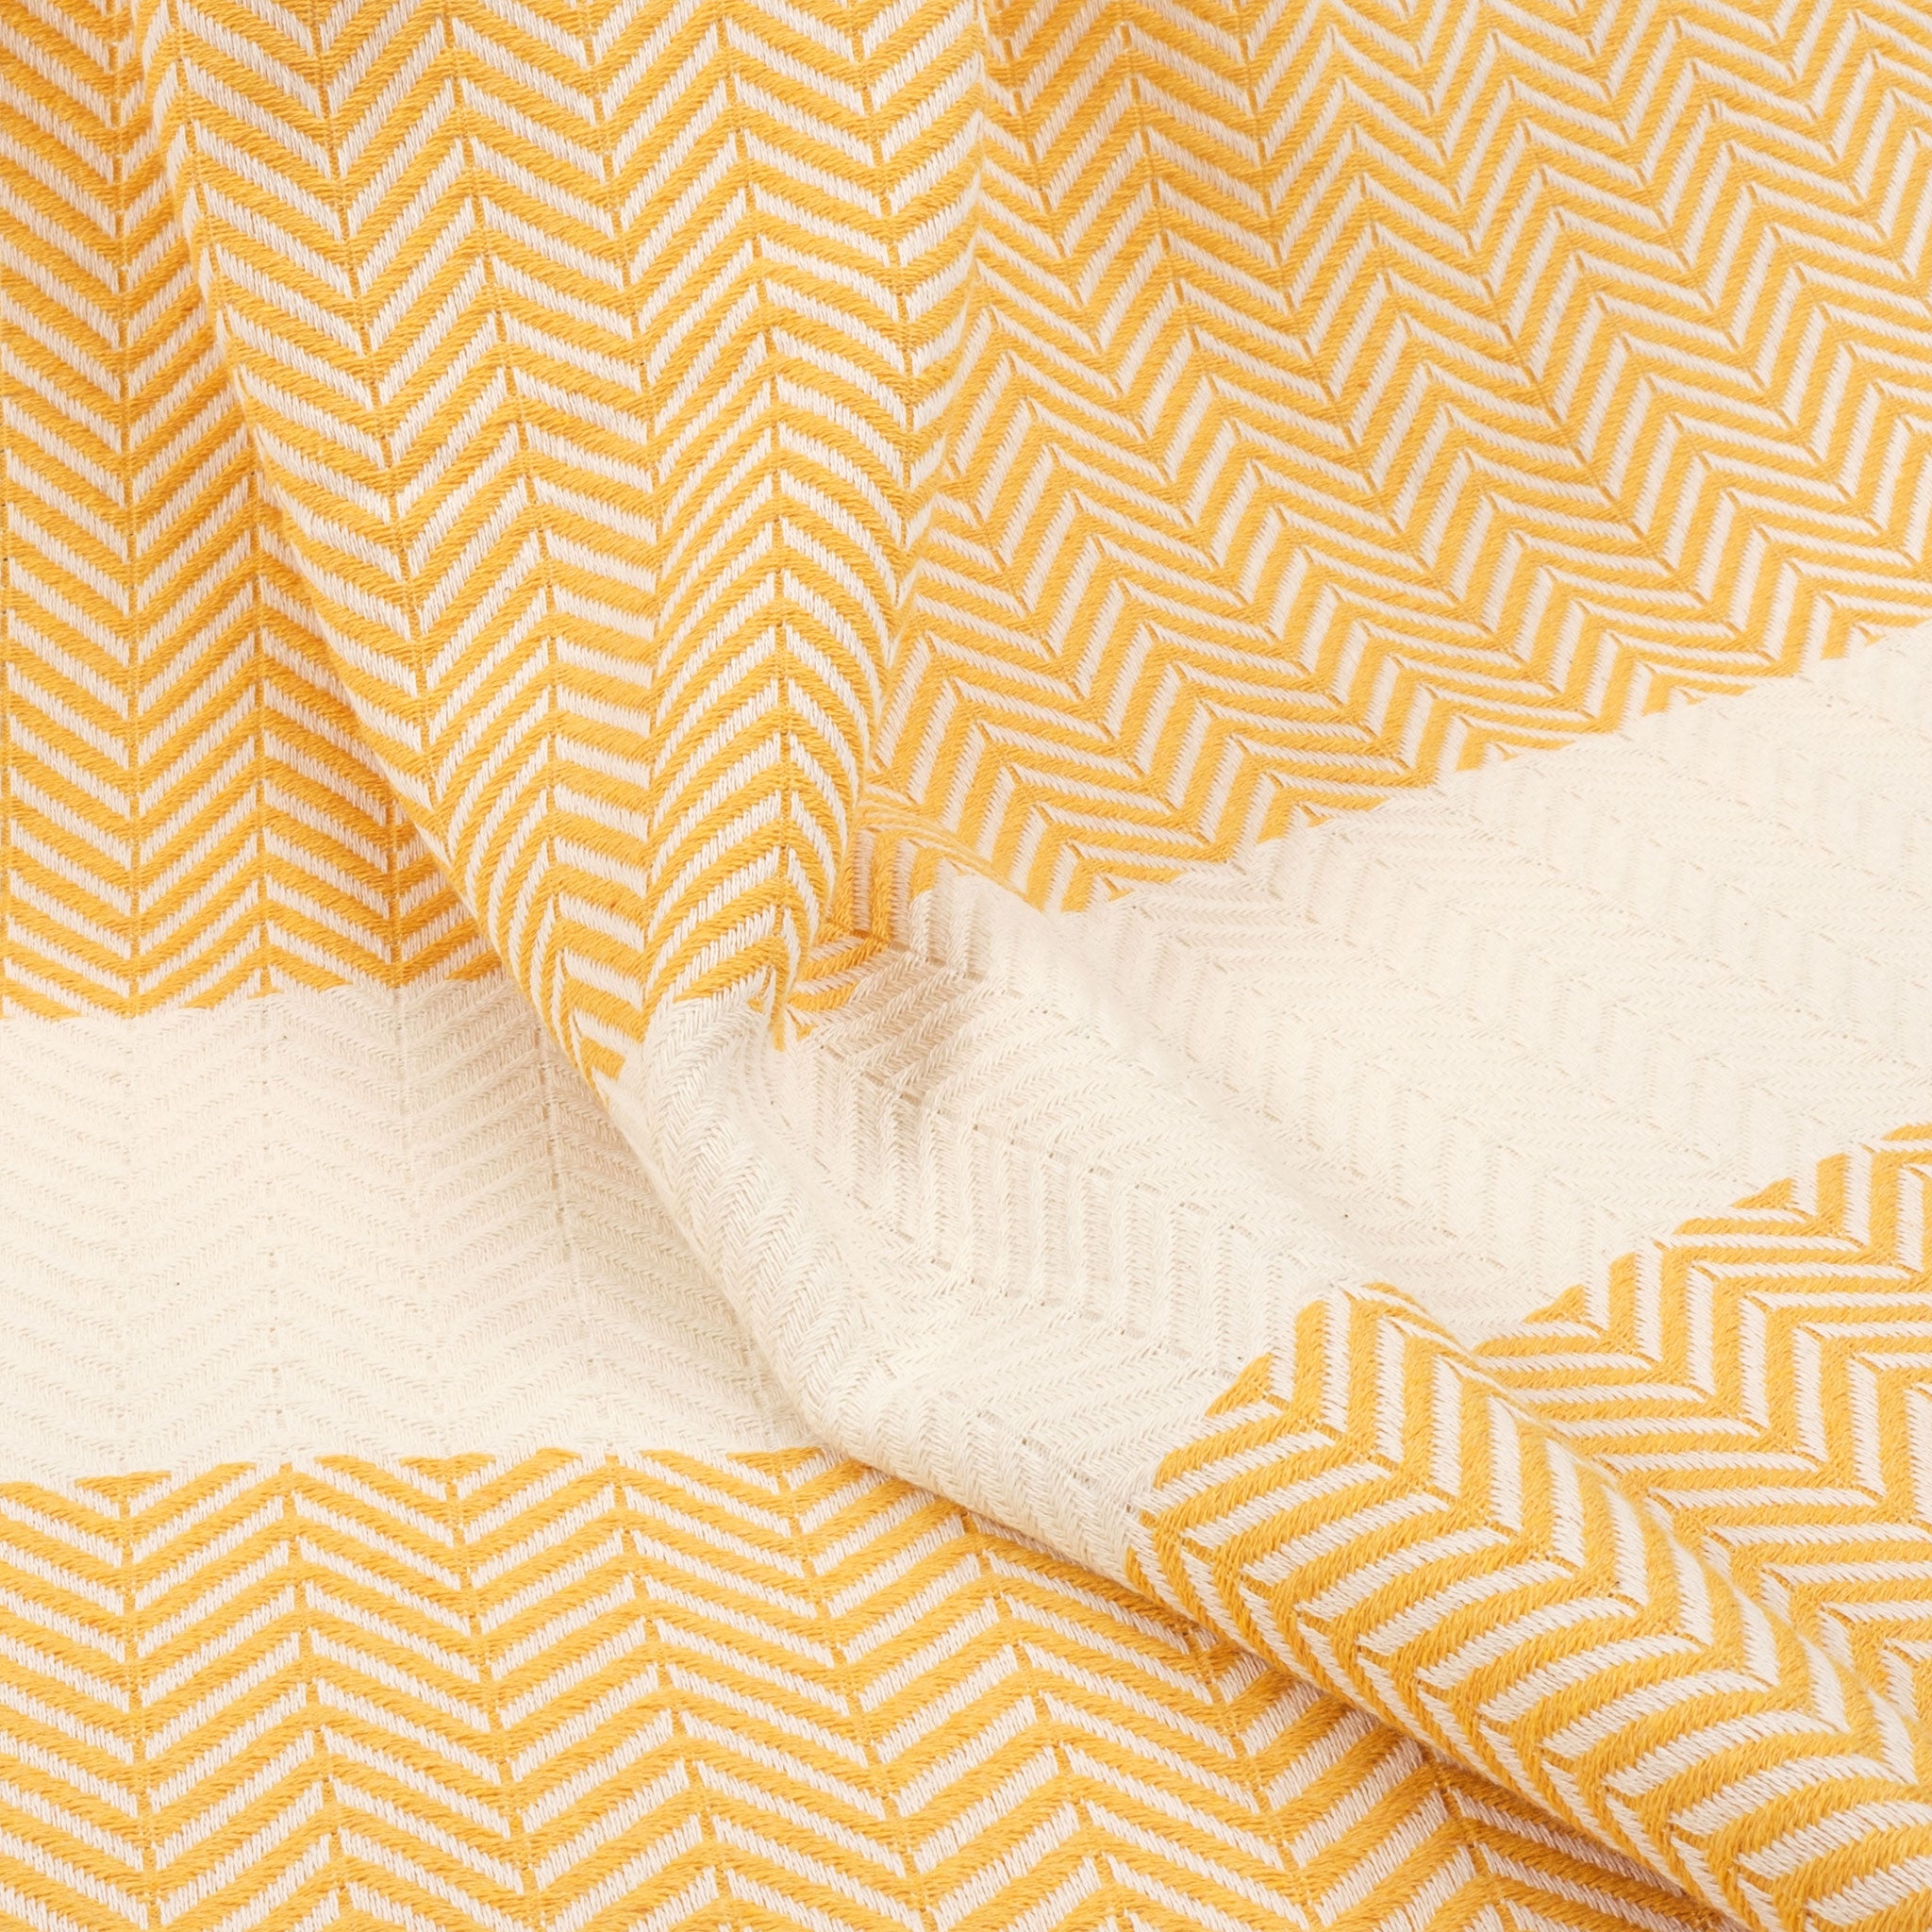 American Soft Linen - 100% Cotton Turkish Peshtemal Towels - 44 Set Case Pack - Yellow - 2